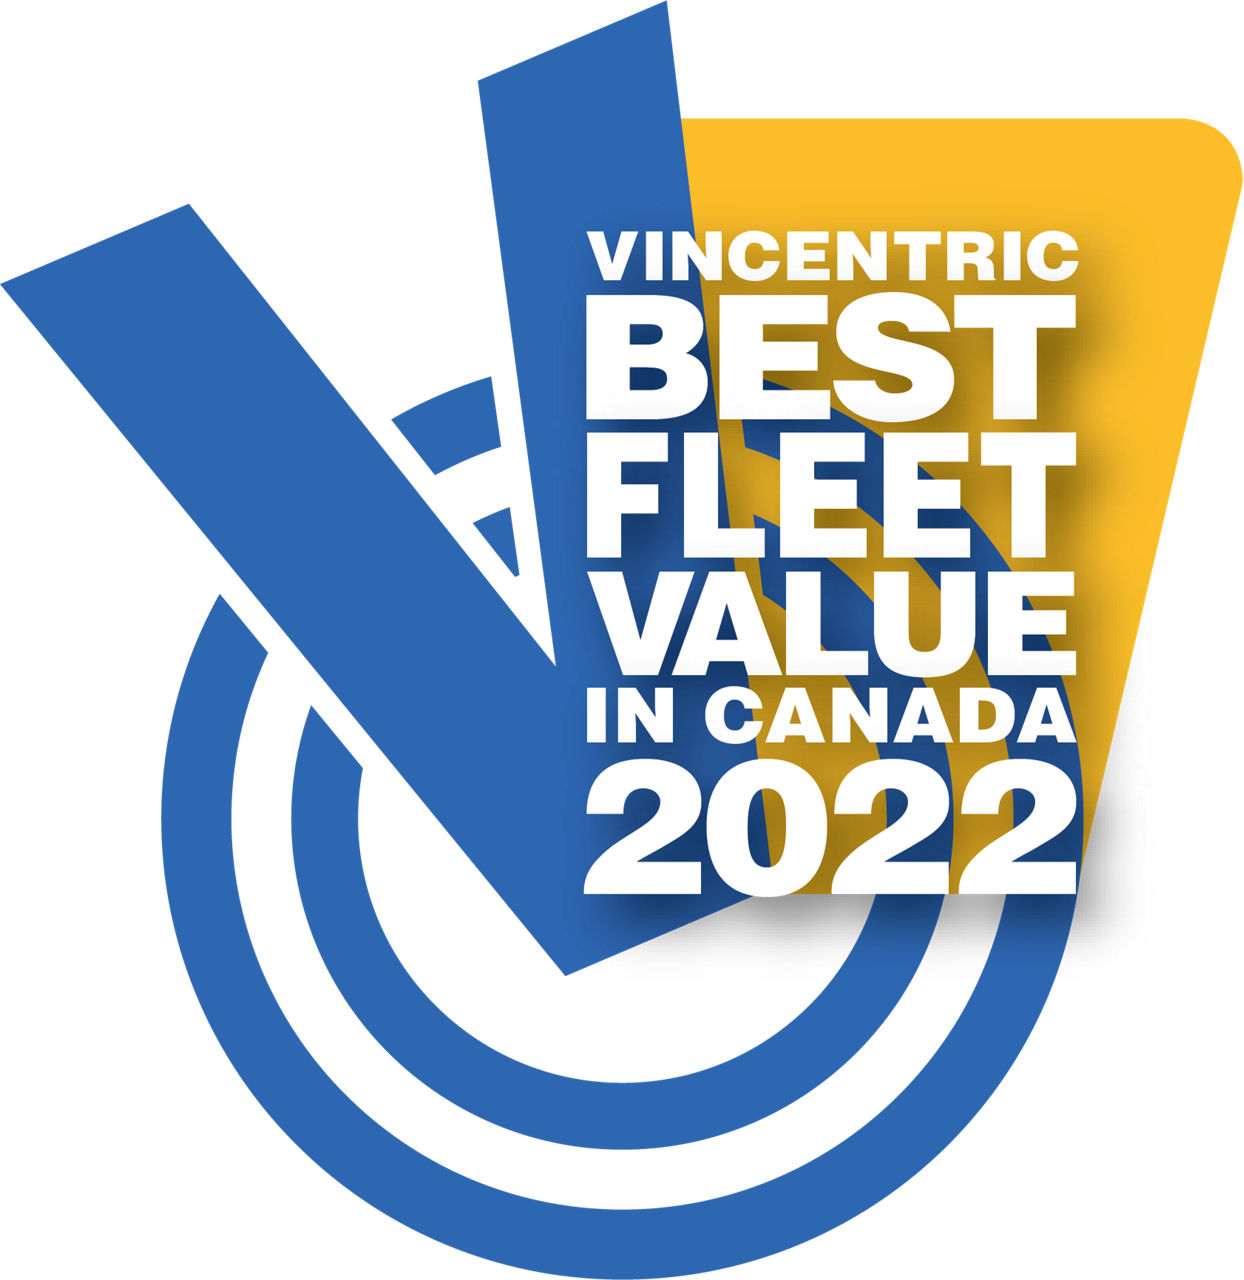 2022 Vincentric Best Fleet Value in Canada